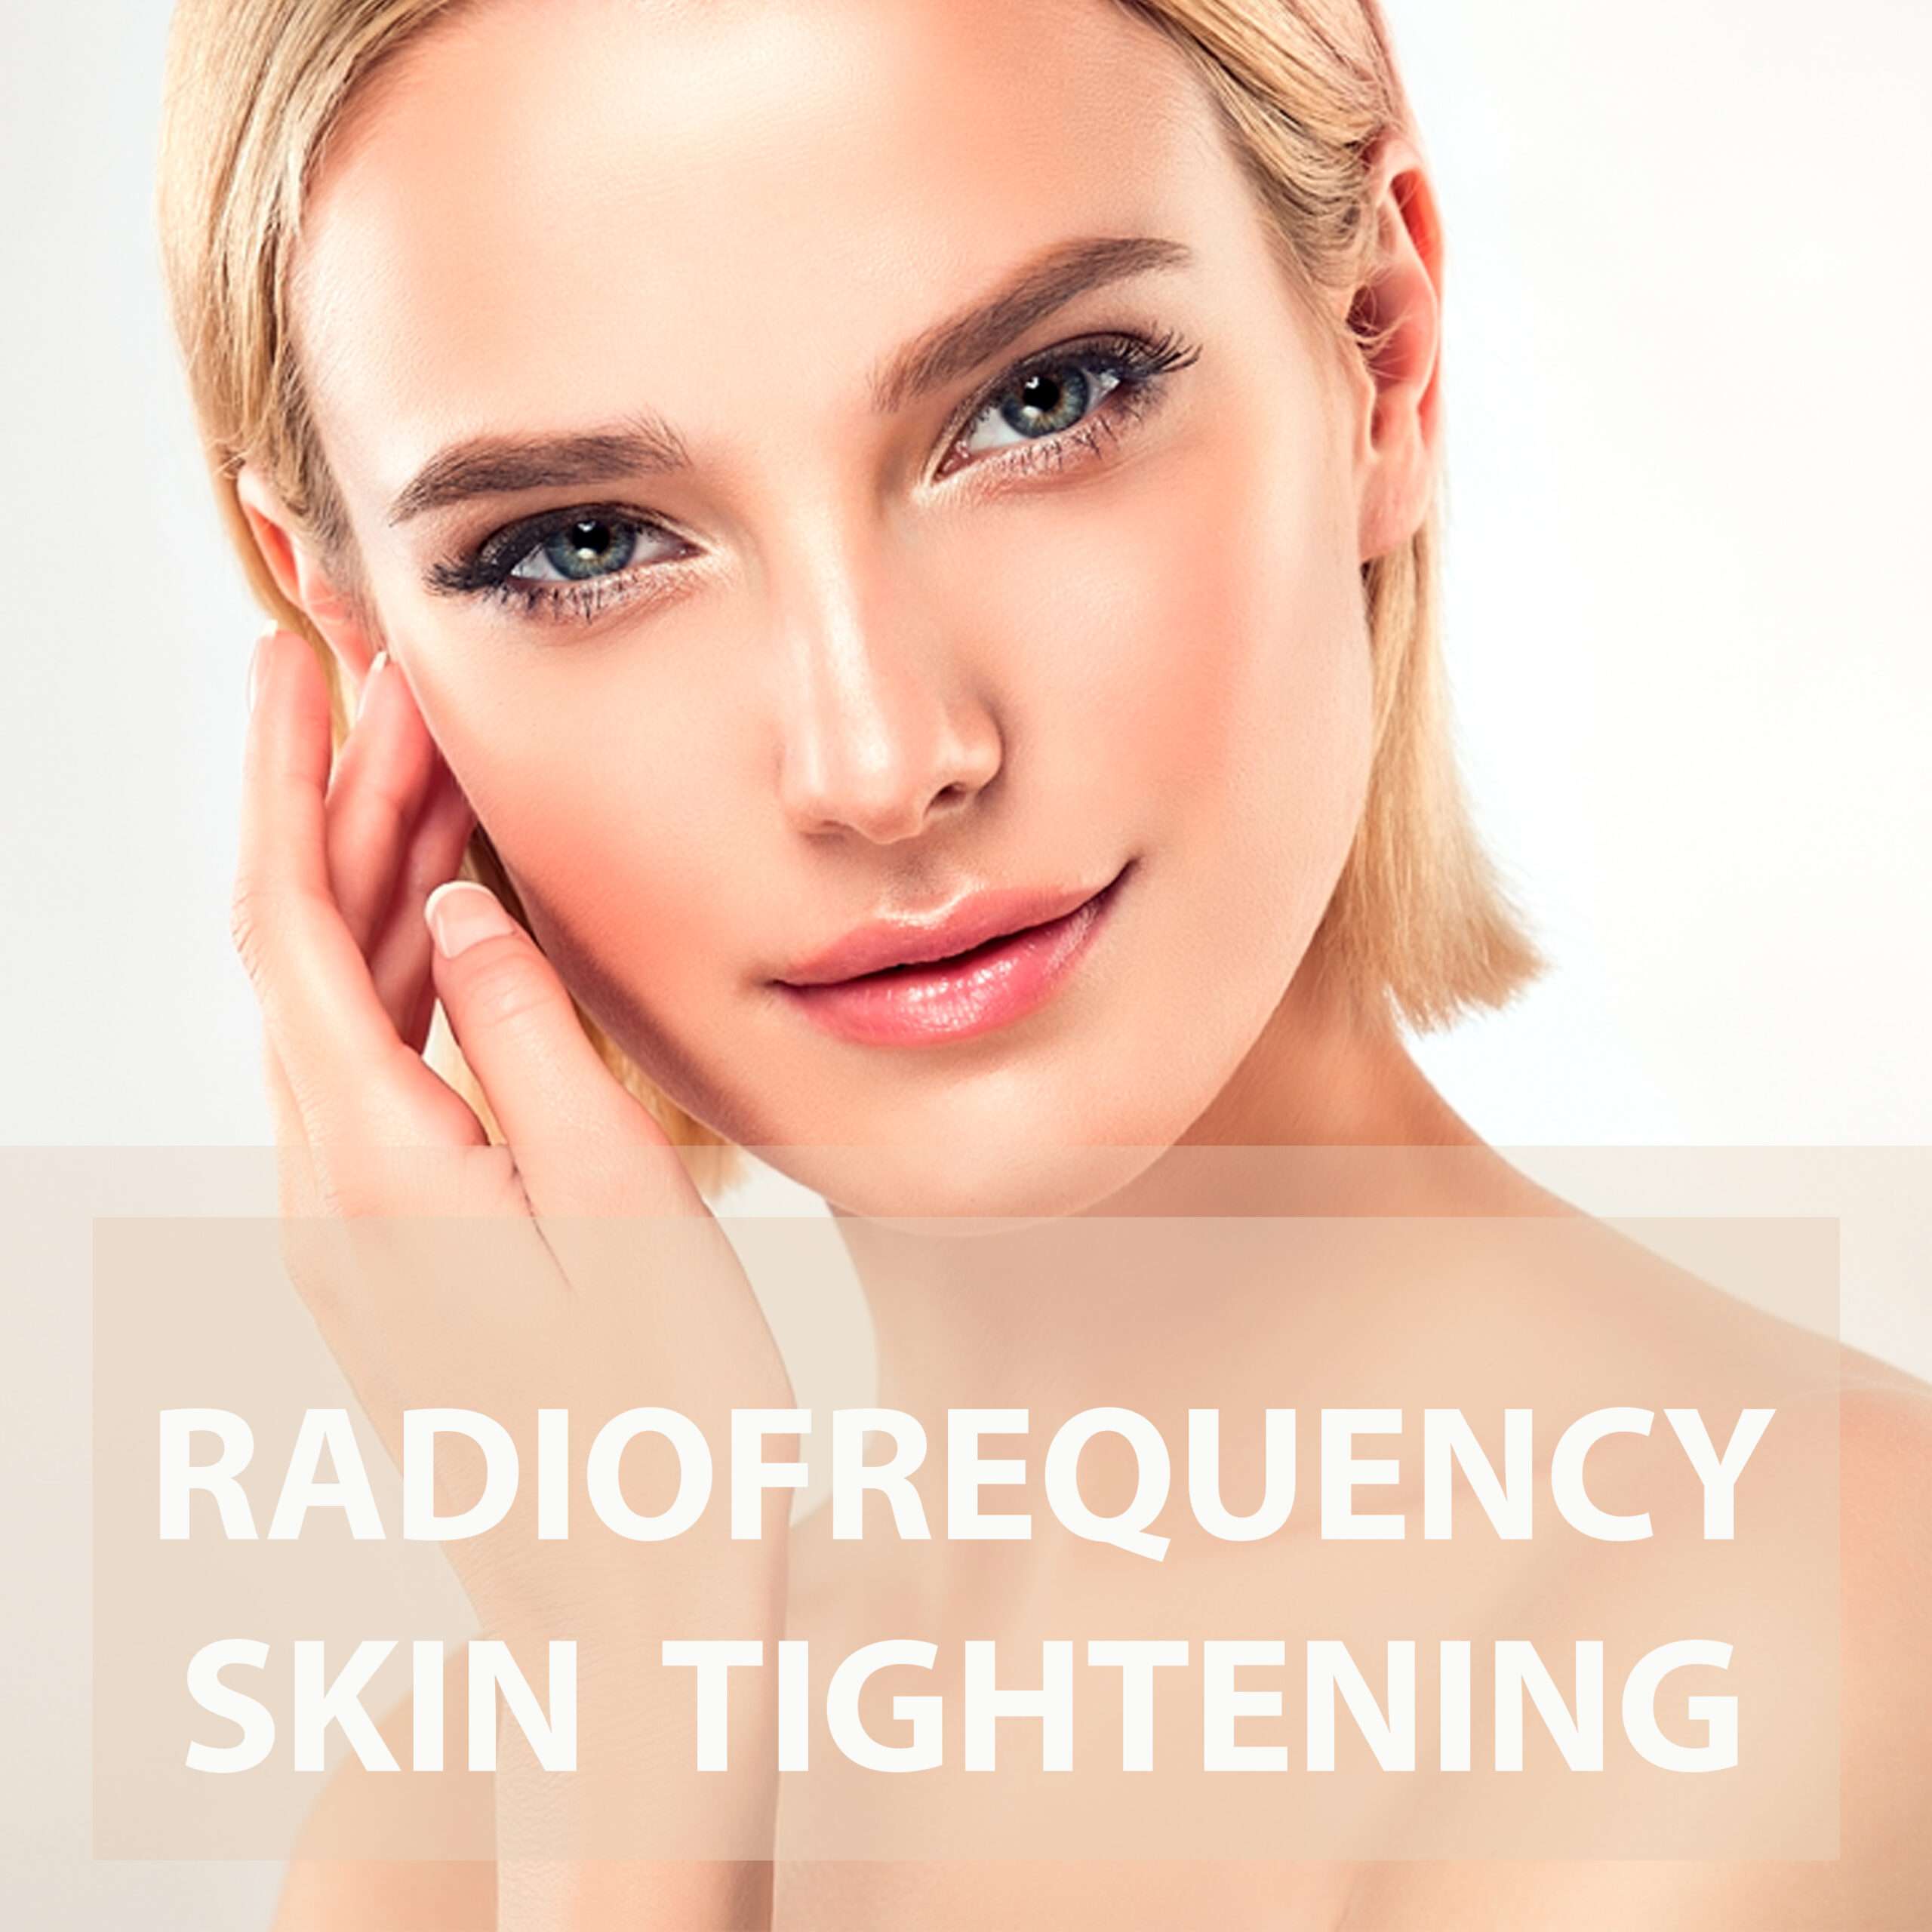 radiofrequency skin tightening